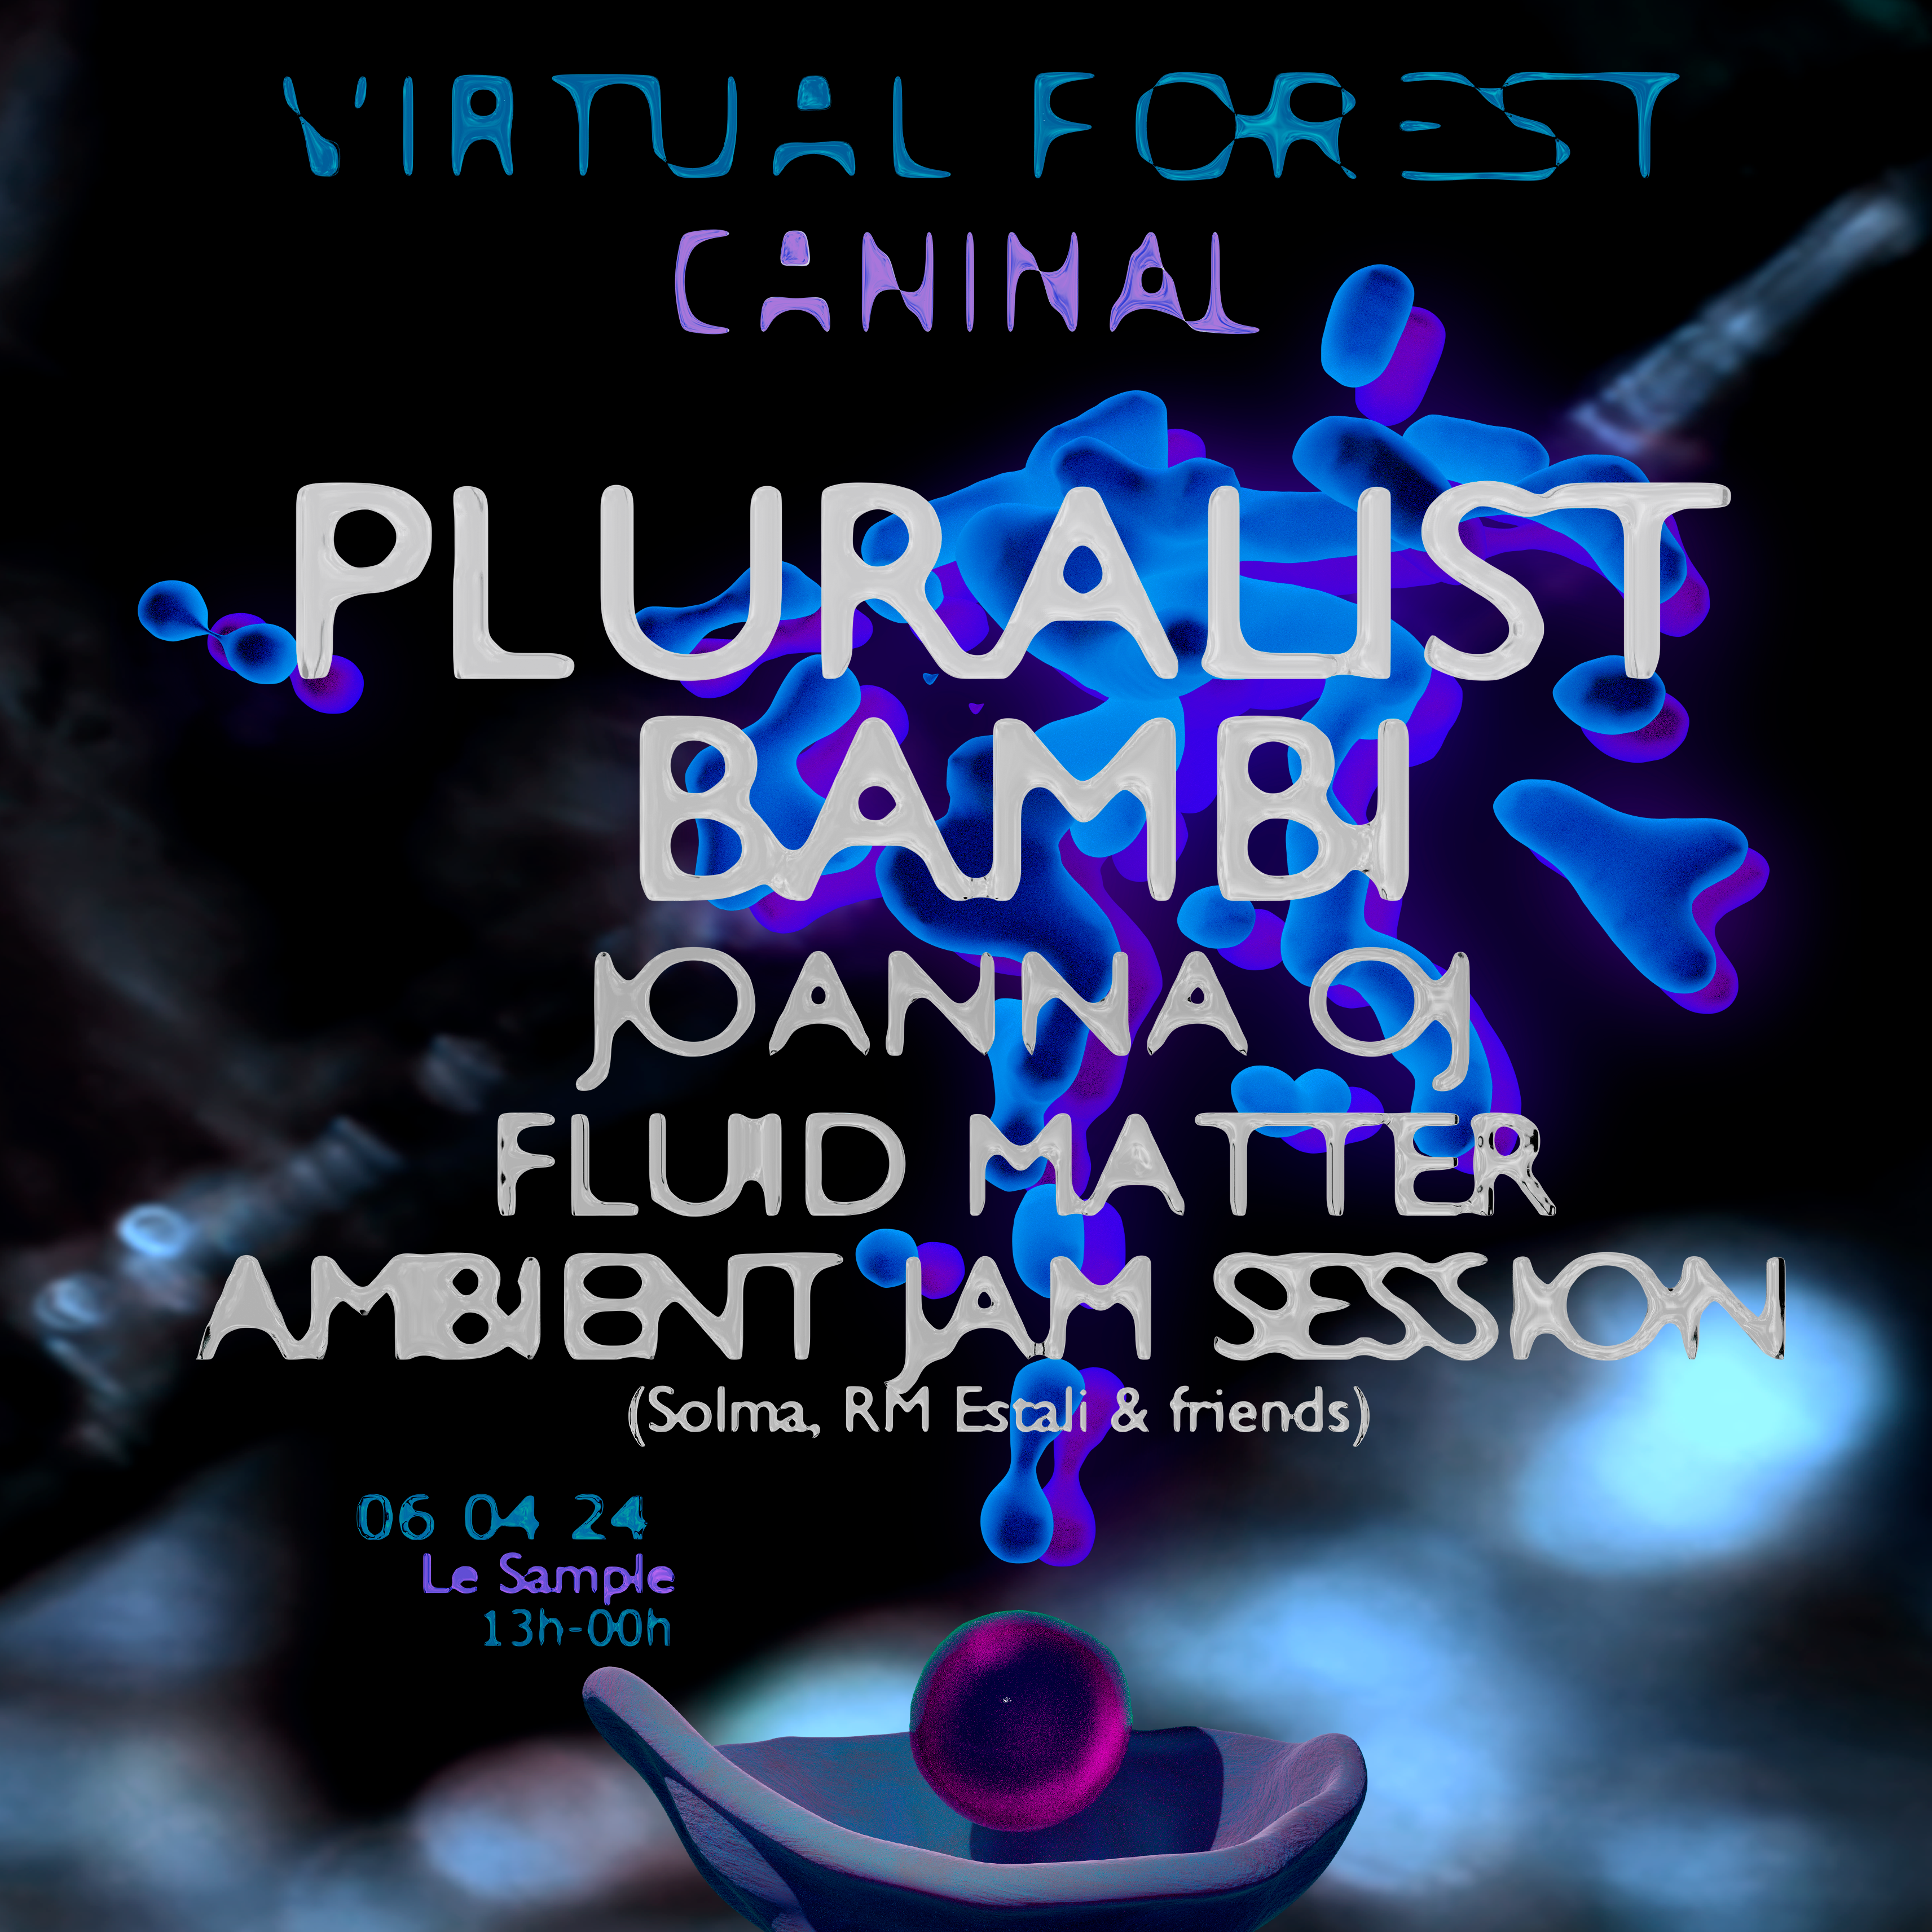 CANINAL ✢ VIRTUAL FOREST: Pluralist, Bambi, Joanna OJ, Fluid Matter, Ambient Jam Session - フライヤー表